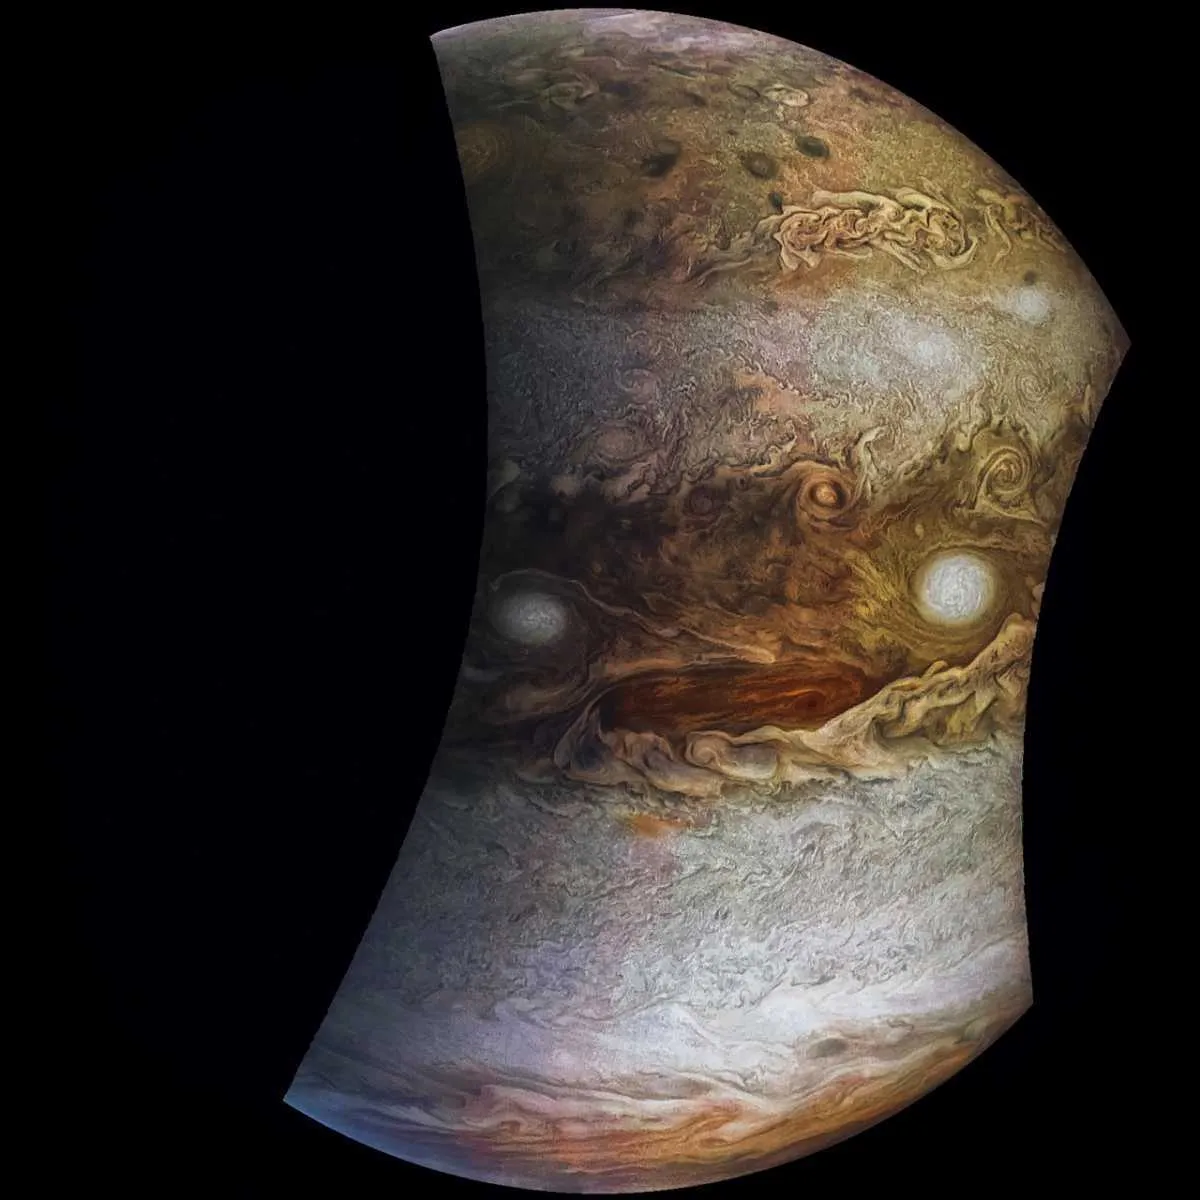 The 'face' of Jupiter © NASA/JPL-Caltech/SwRI/MSSS/Jason Major